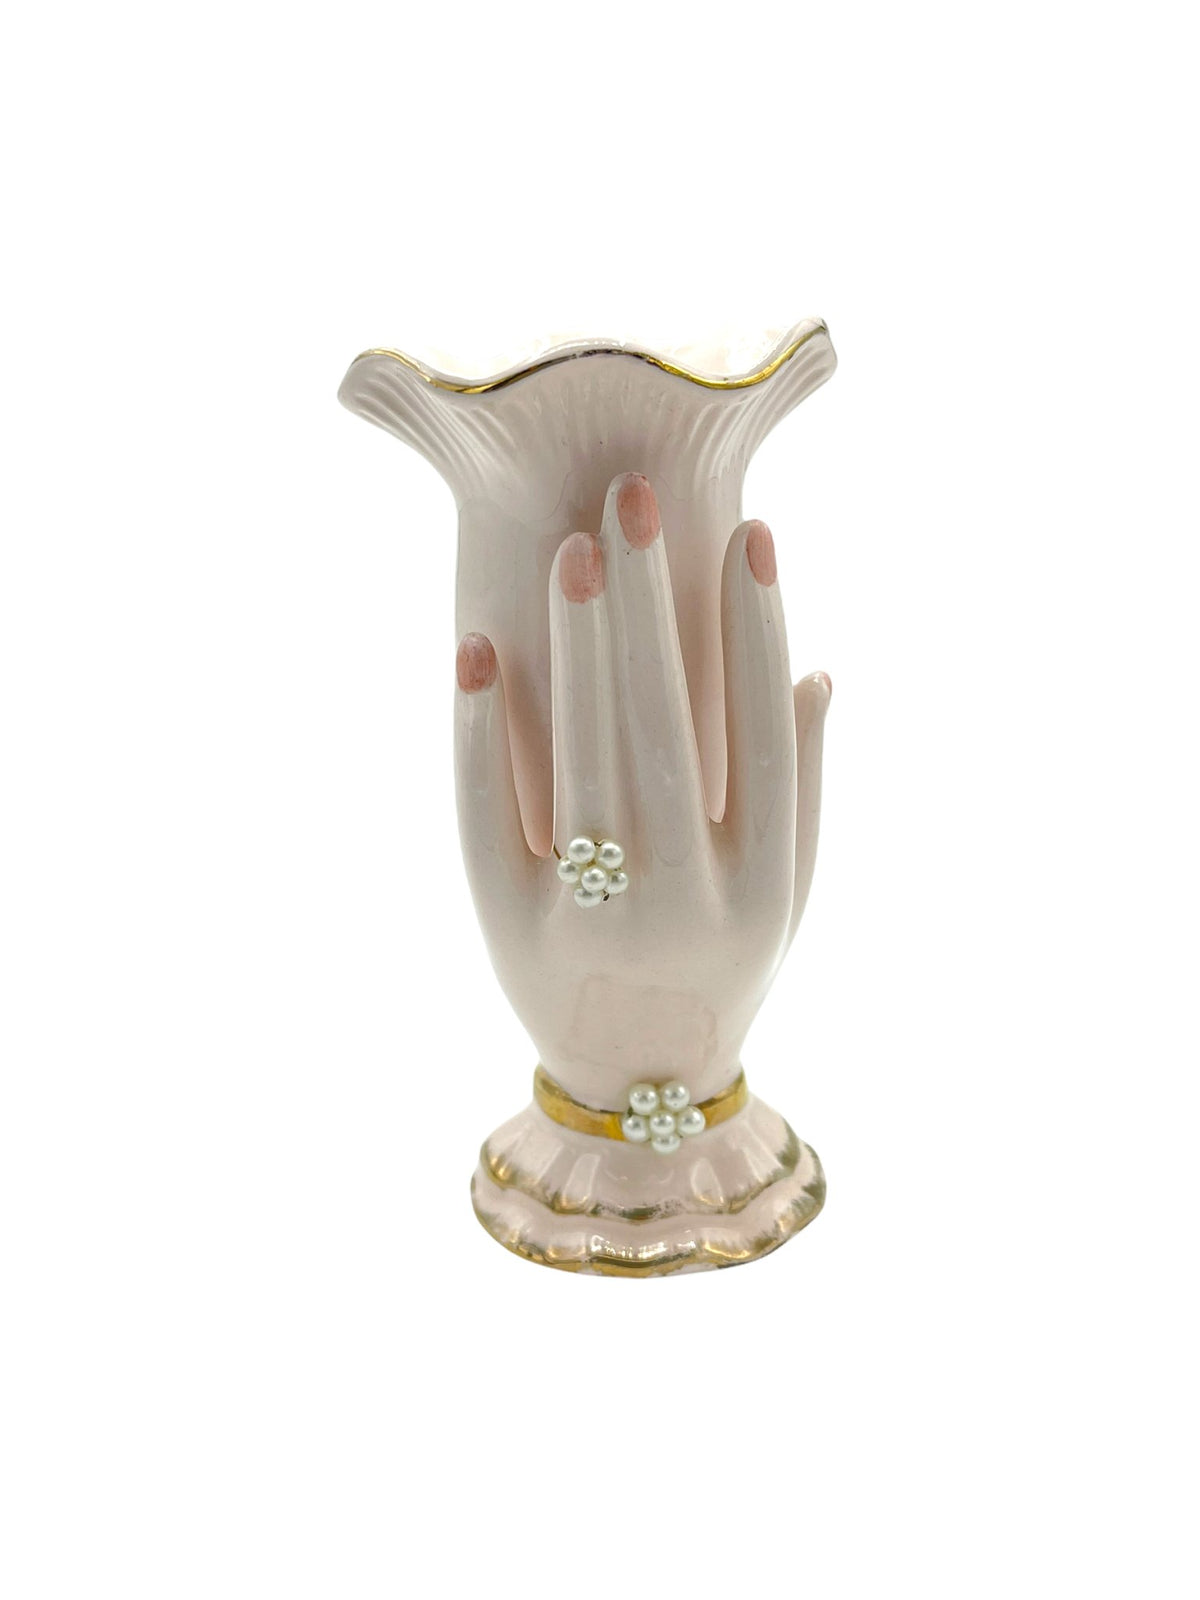 Pink Women Hand Bud Vase - 24 Wishes Vintage Jewelry